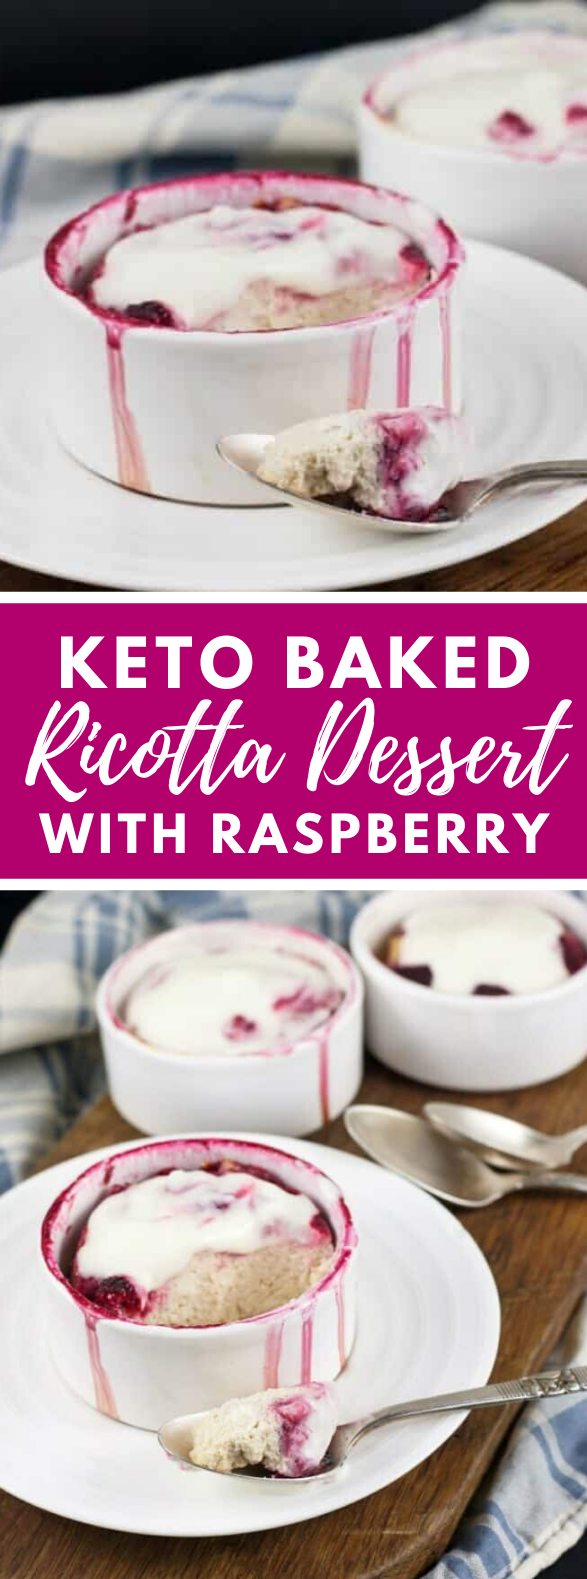 Keto Baked Ricotta Dessert with Raspberry #diet #healthydessert